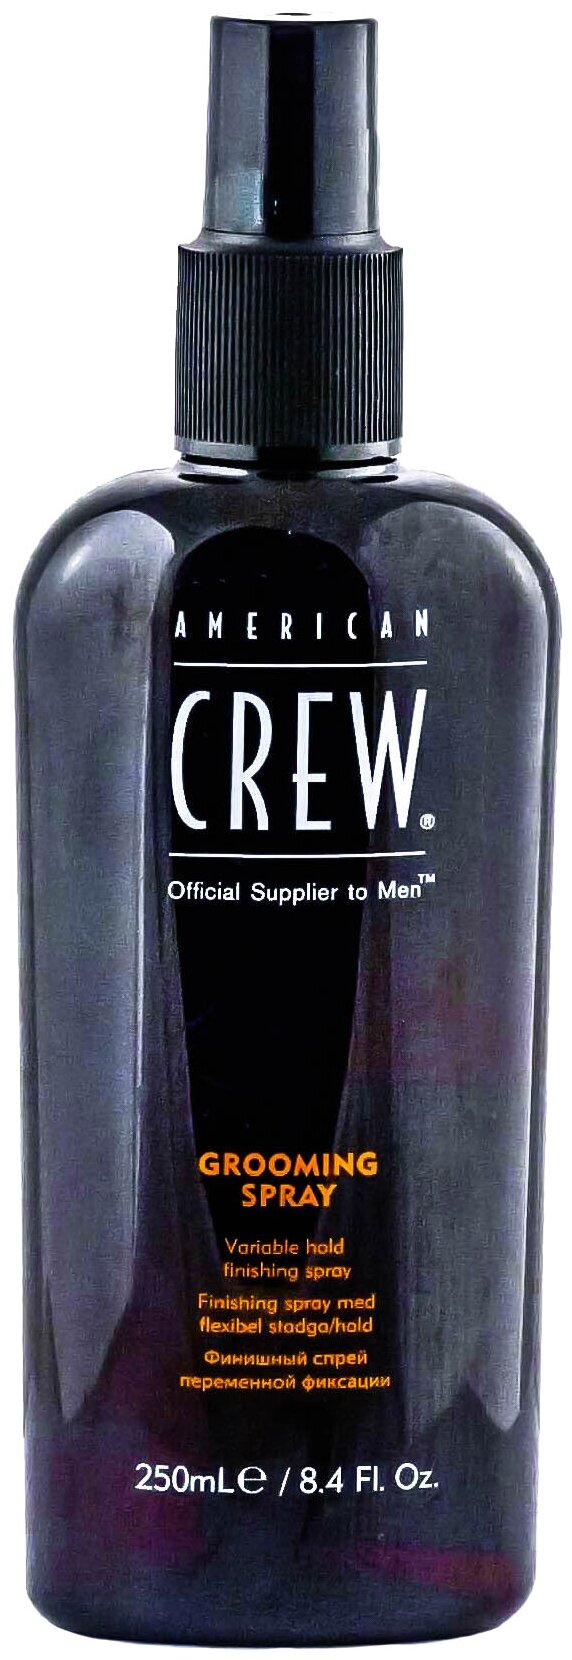 American Crew Classic Grooming Spray Спрей для финальной укладки волос 250 мл (American Crew, ) - фото №2